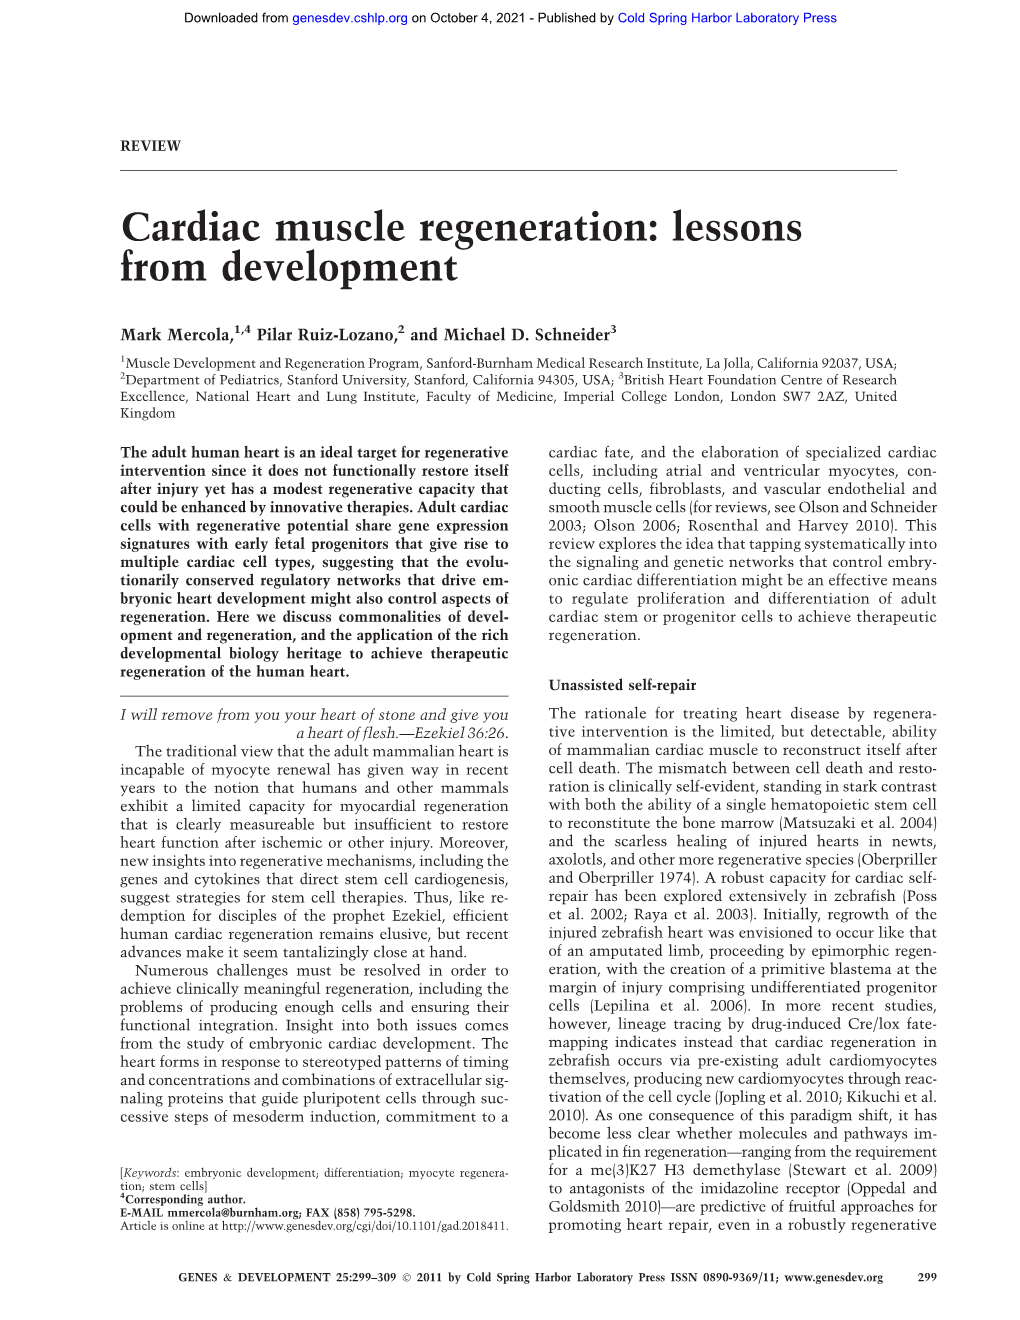 Cardiac Muscle Regeneration: Lessons from Development